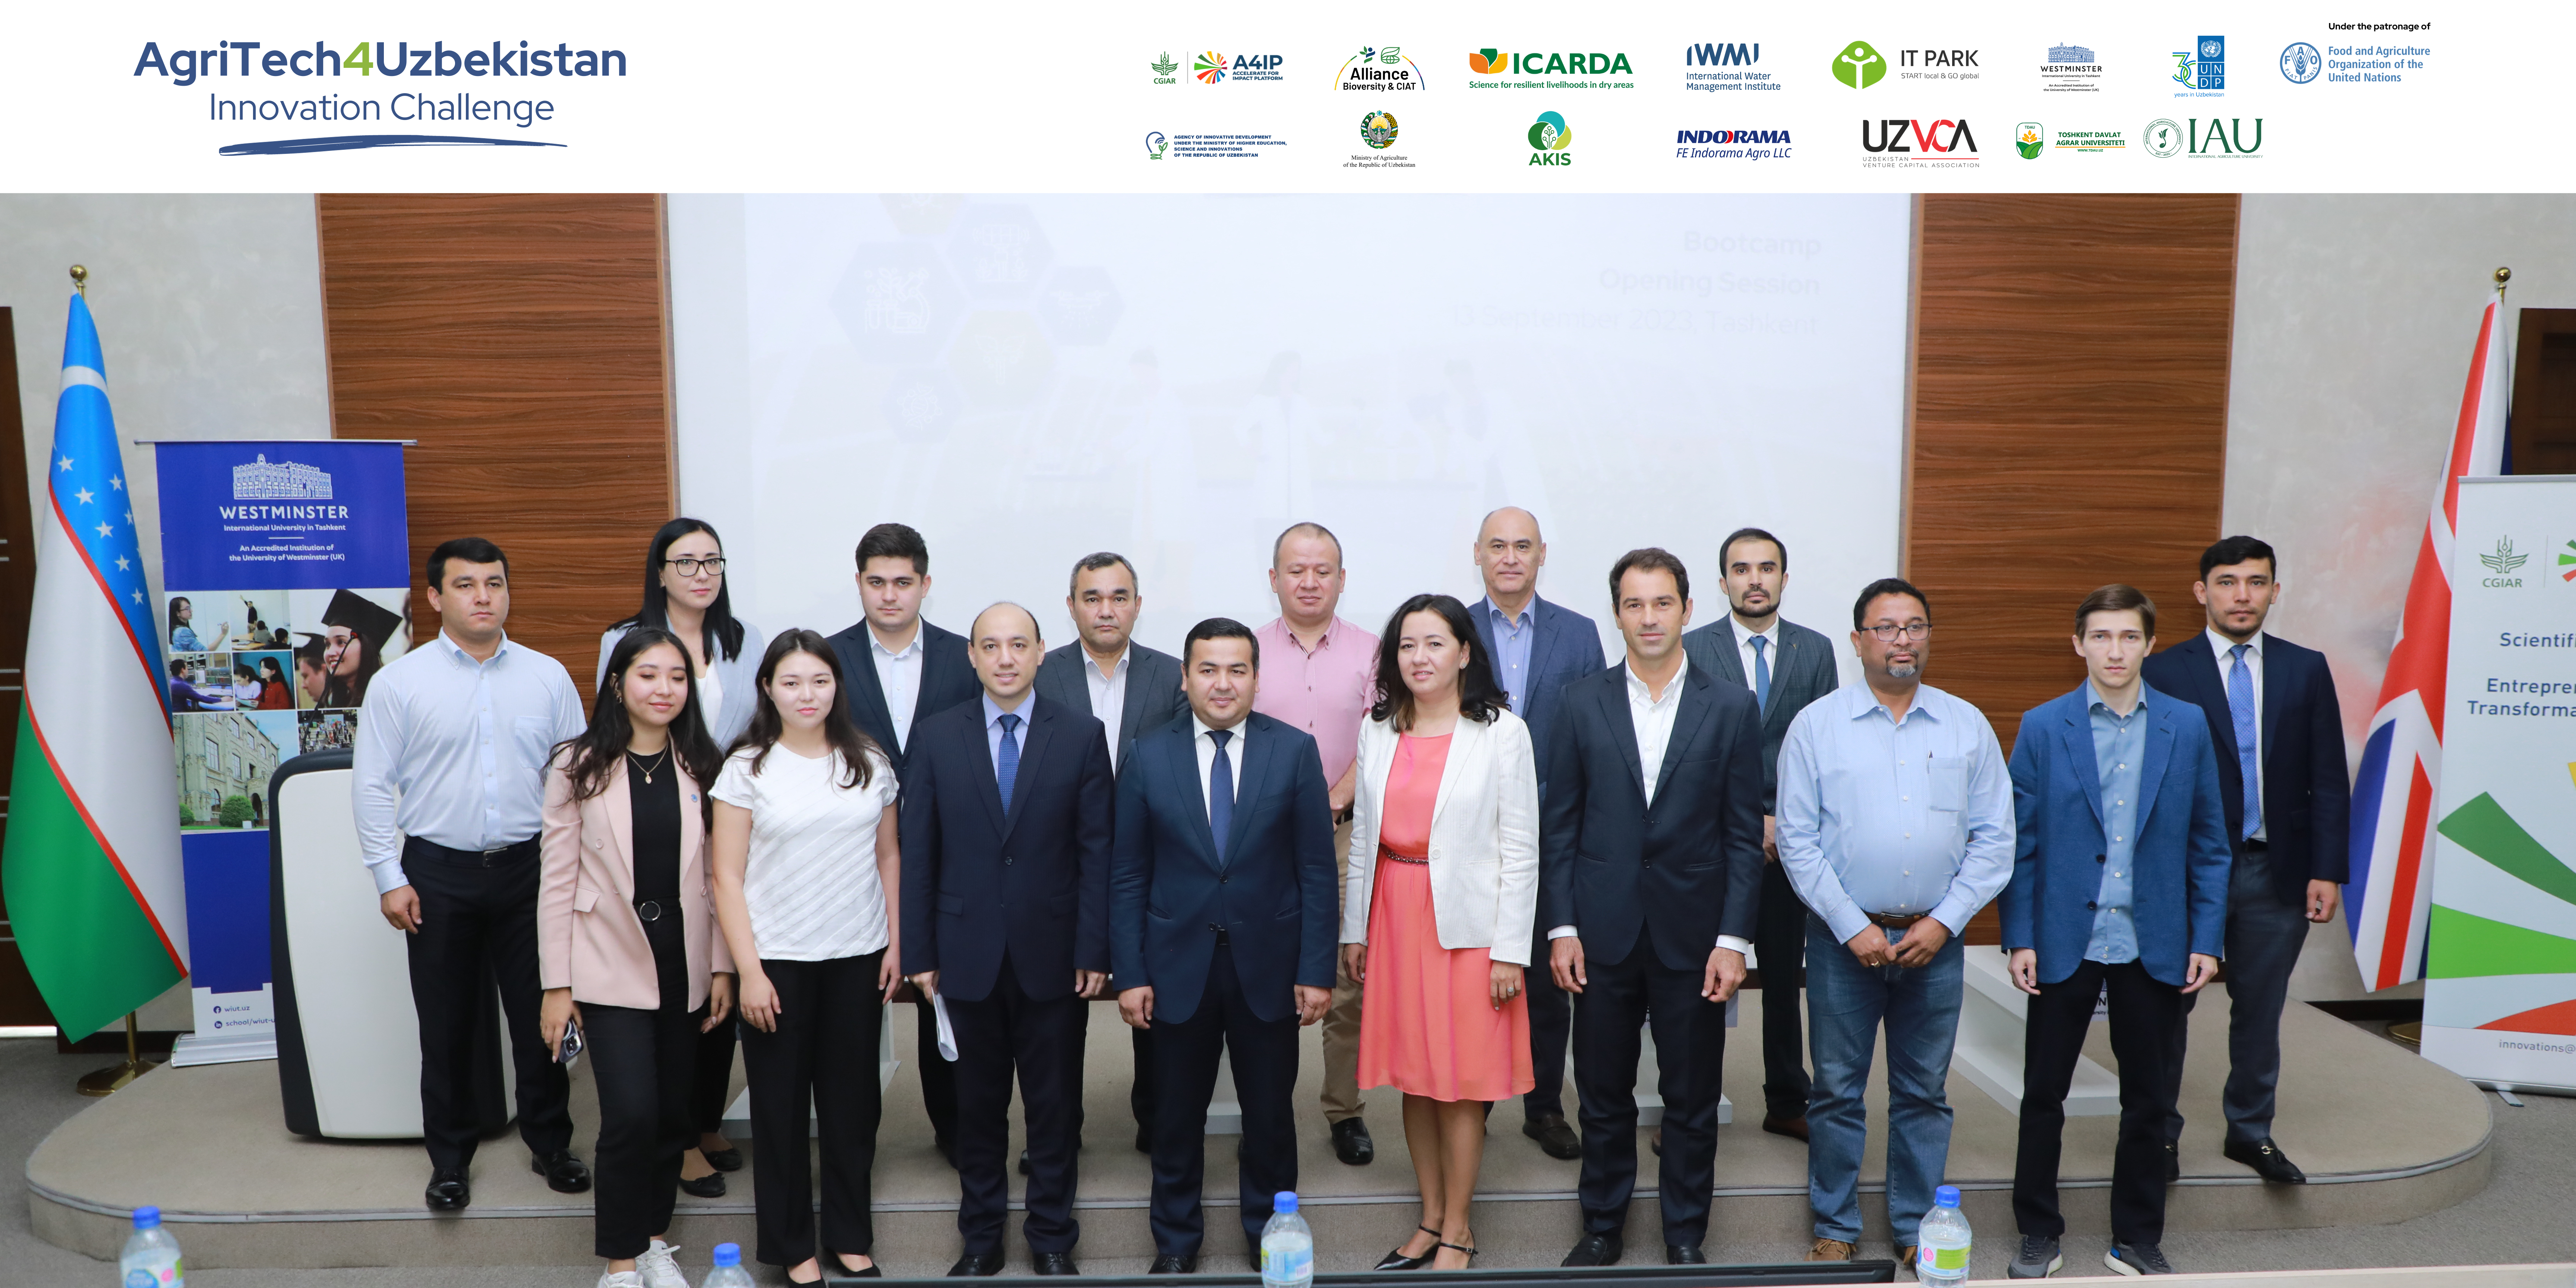 agritech4uzbekistan partners